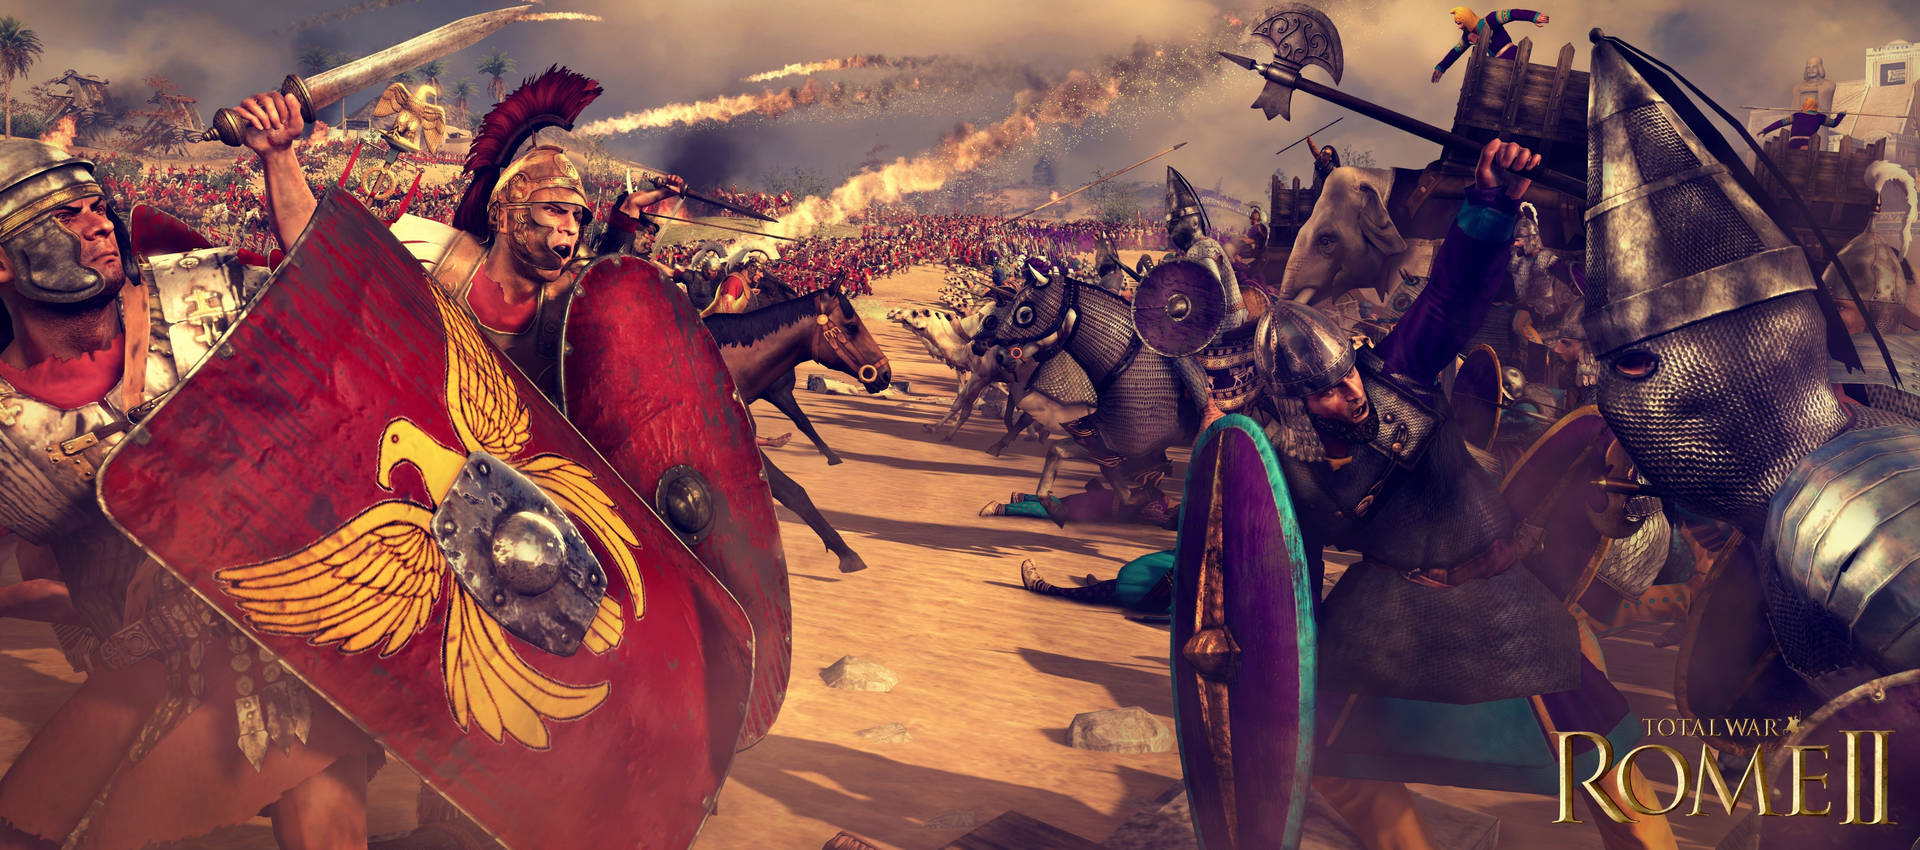 Total War Rome 2 Team Fight